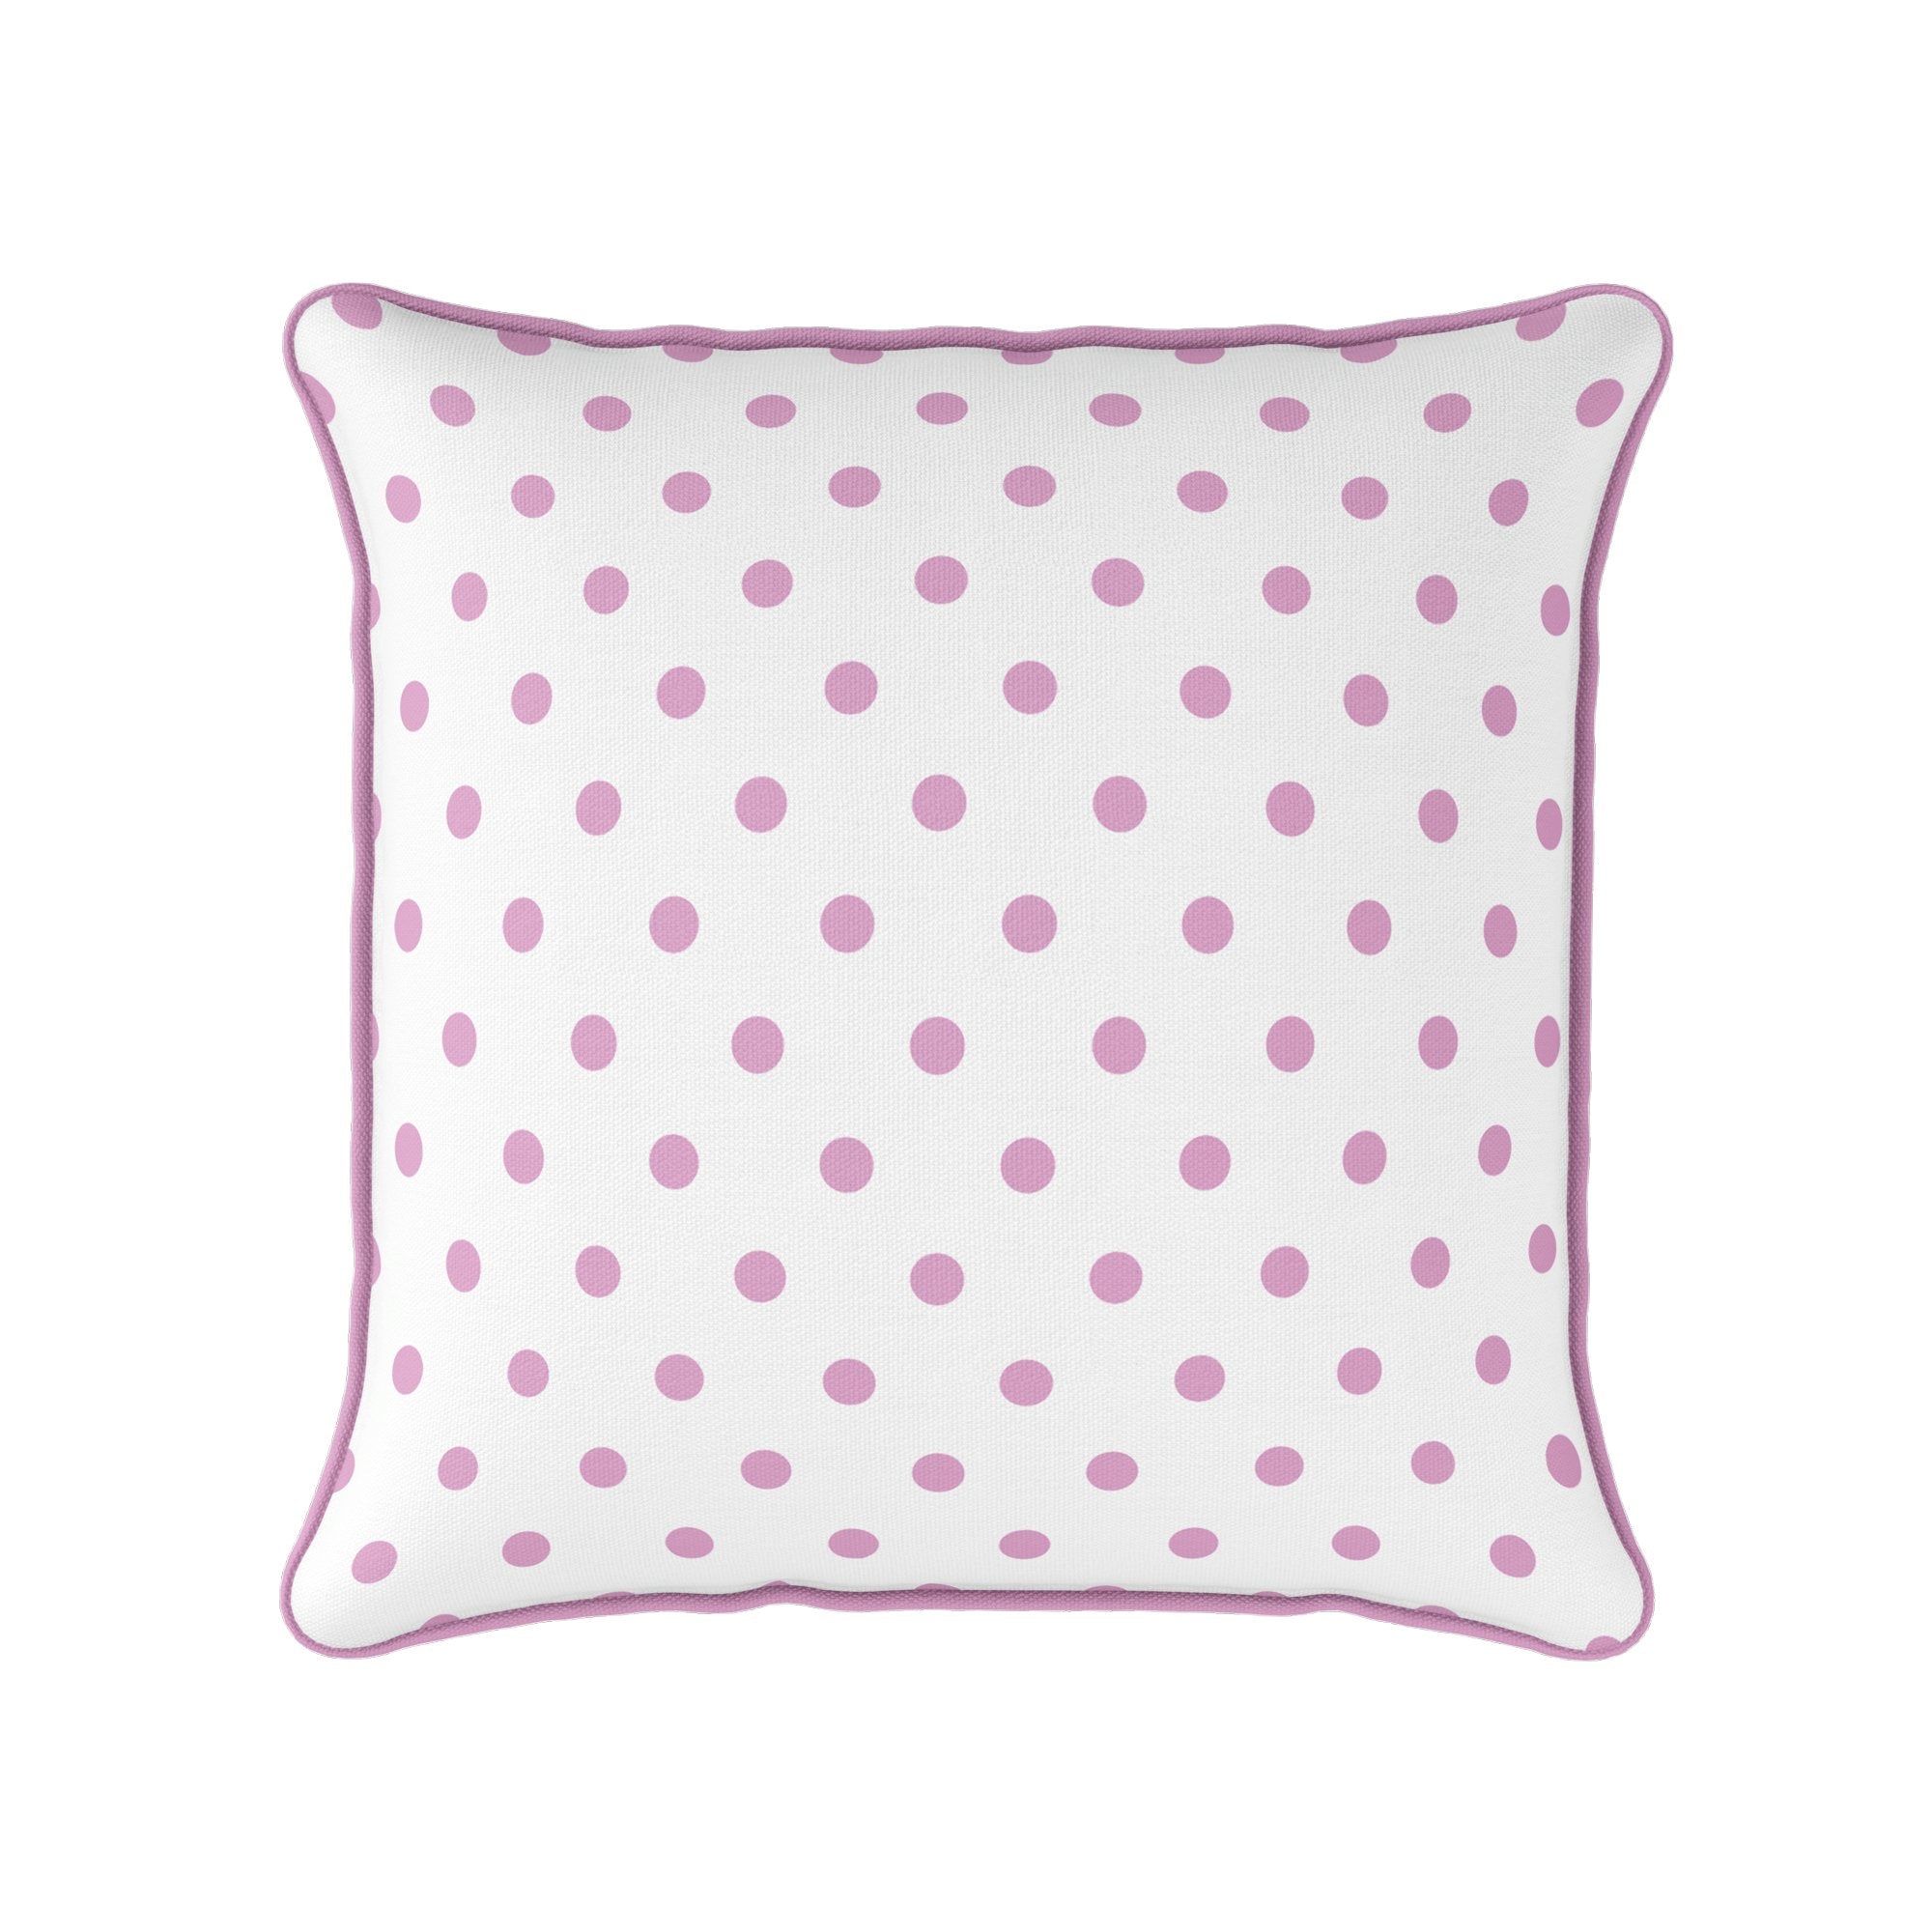 Spotty Day Cushion - Pinks - Hydrangea Lane Home